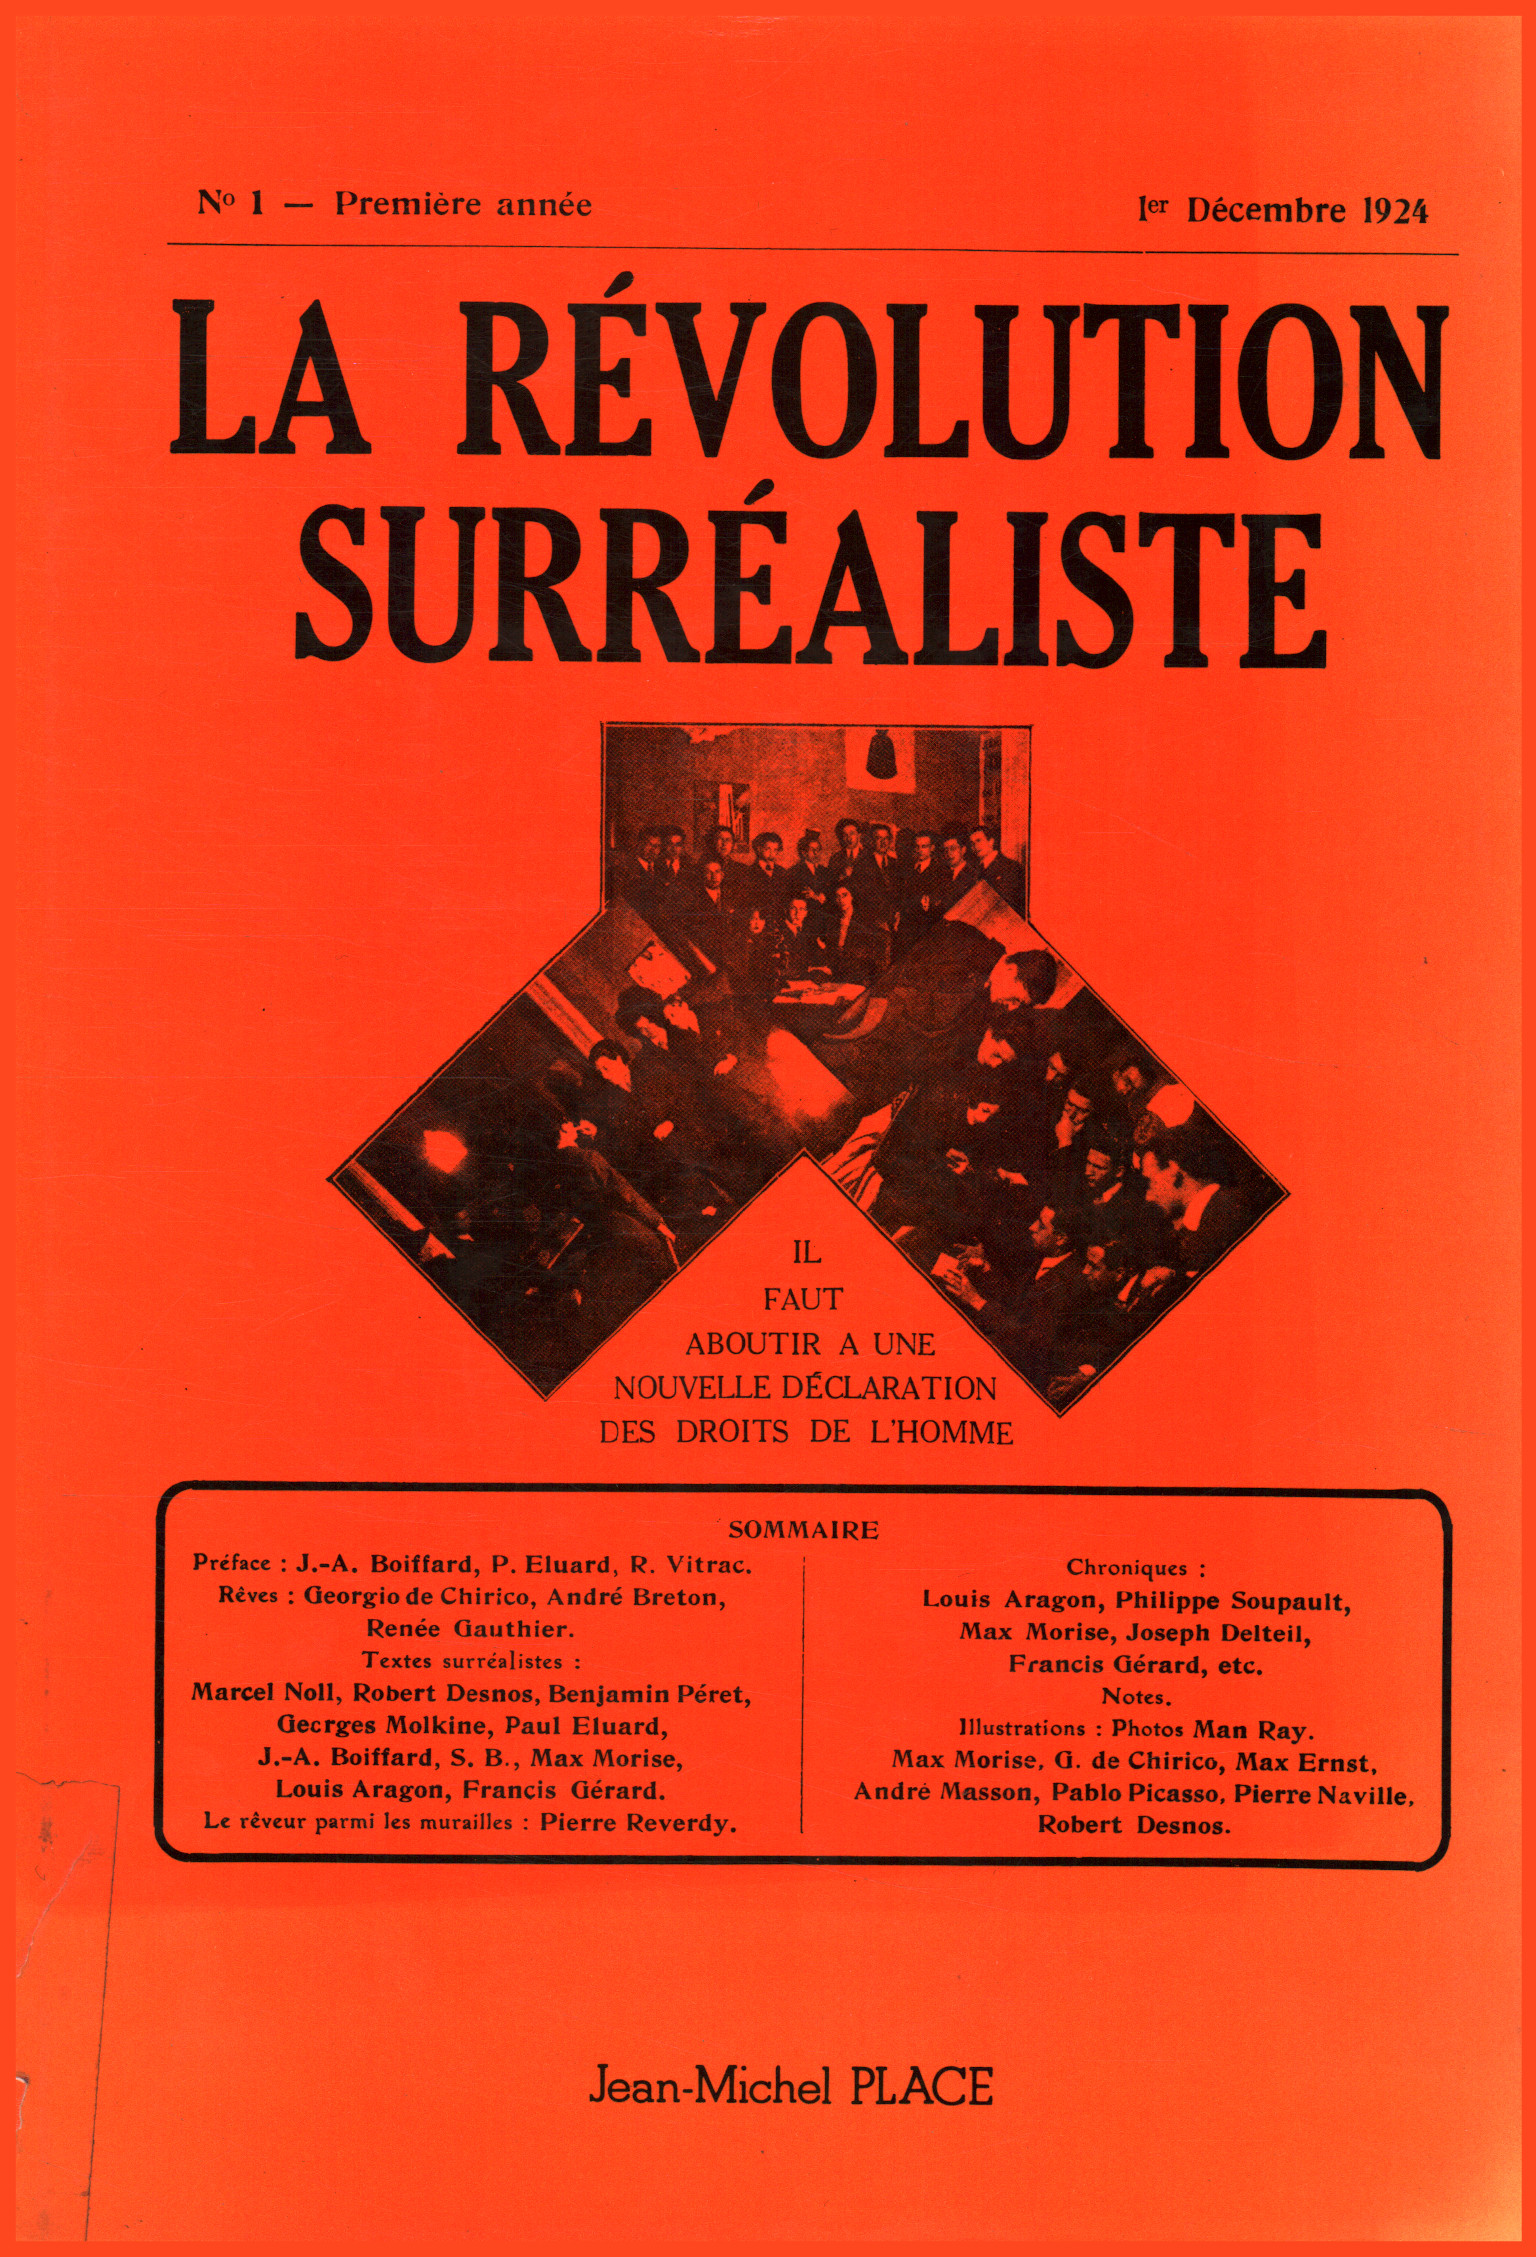 The Surrealist Revolution. Collection%2,La Revolution Surrealist. Collection%2,La Revolution Surrealist. Collection%2